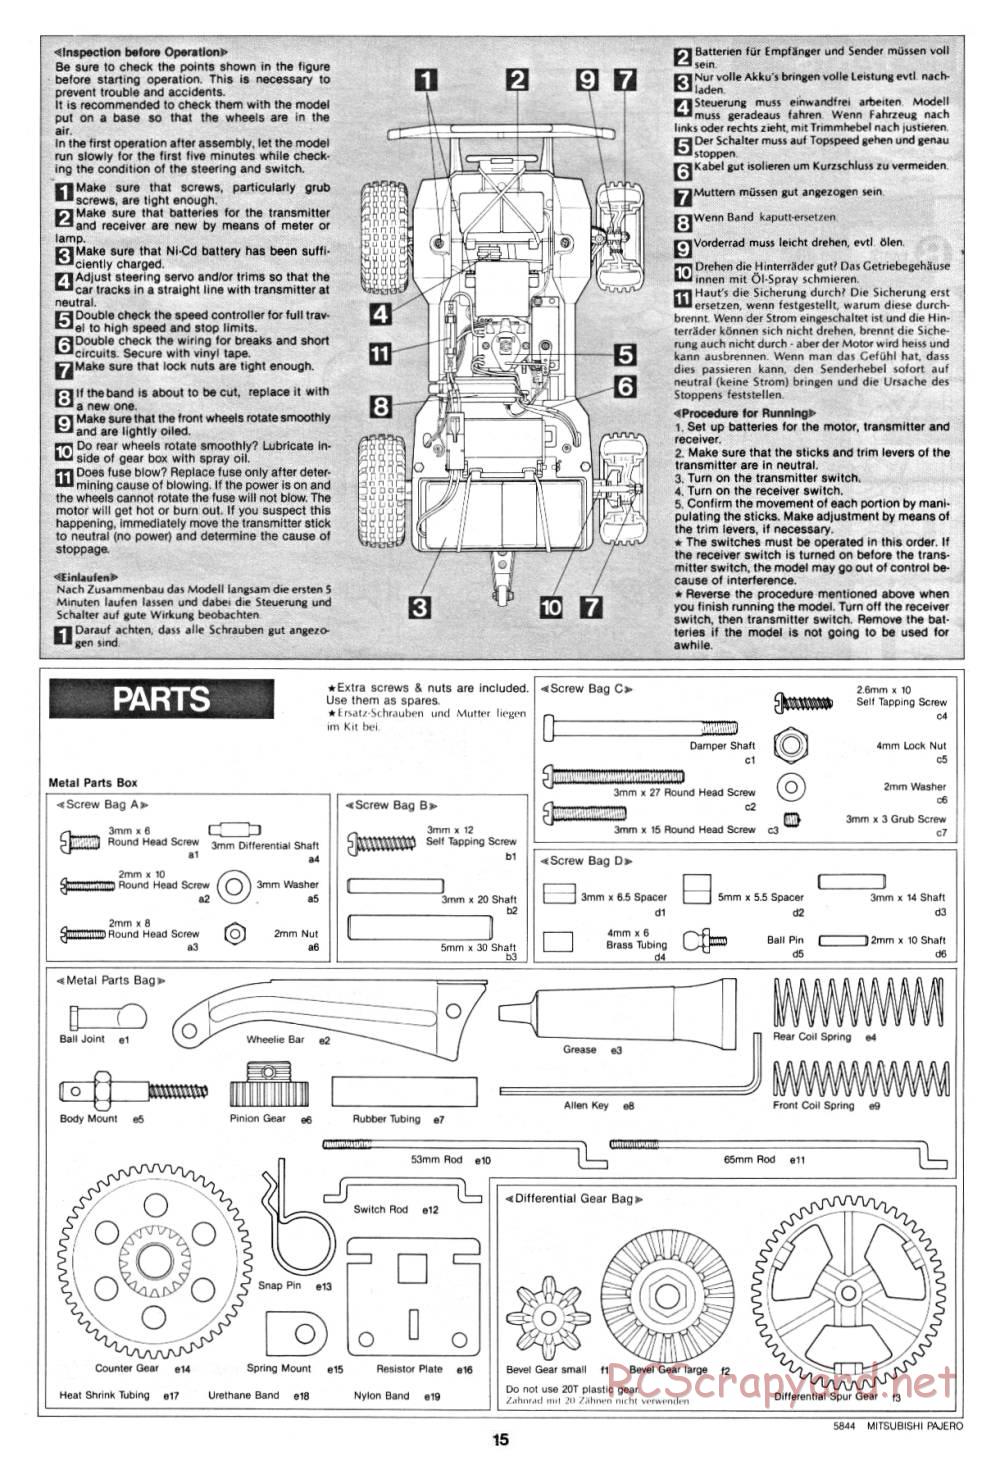 Tamiya - Mitsubishi Pajero - 58044 - Manual - Page 15